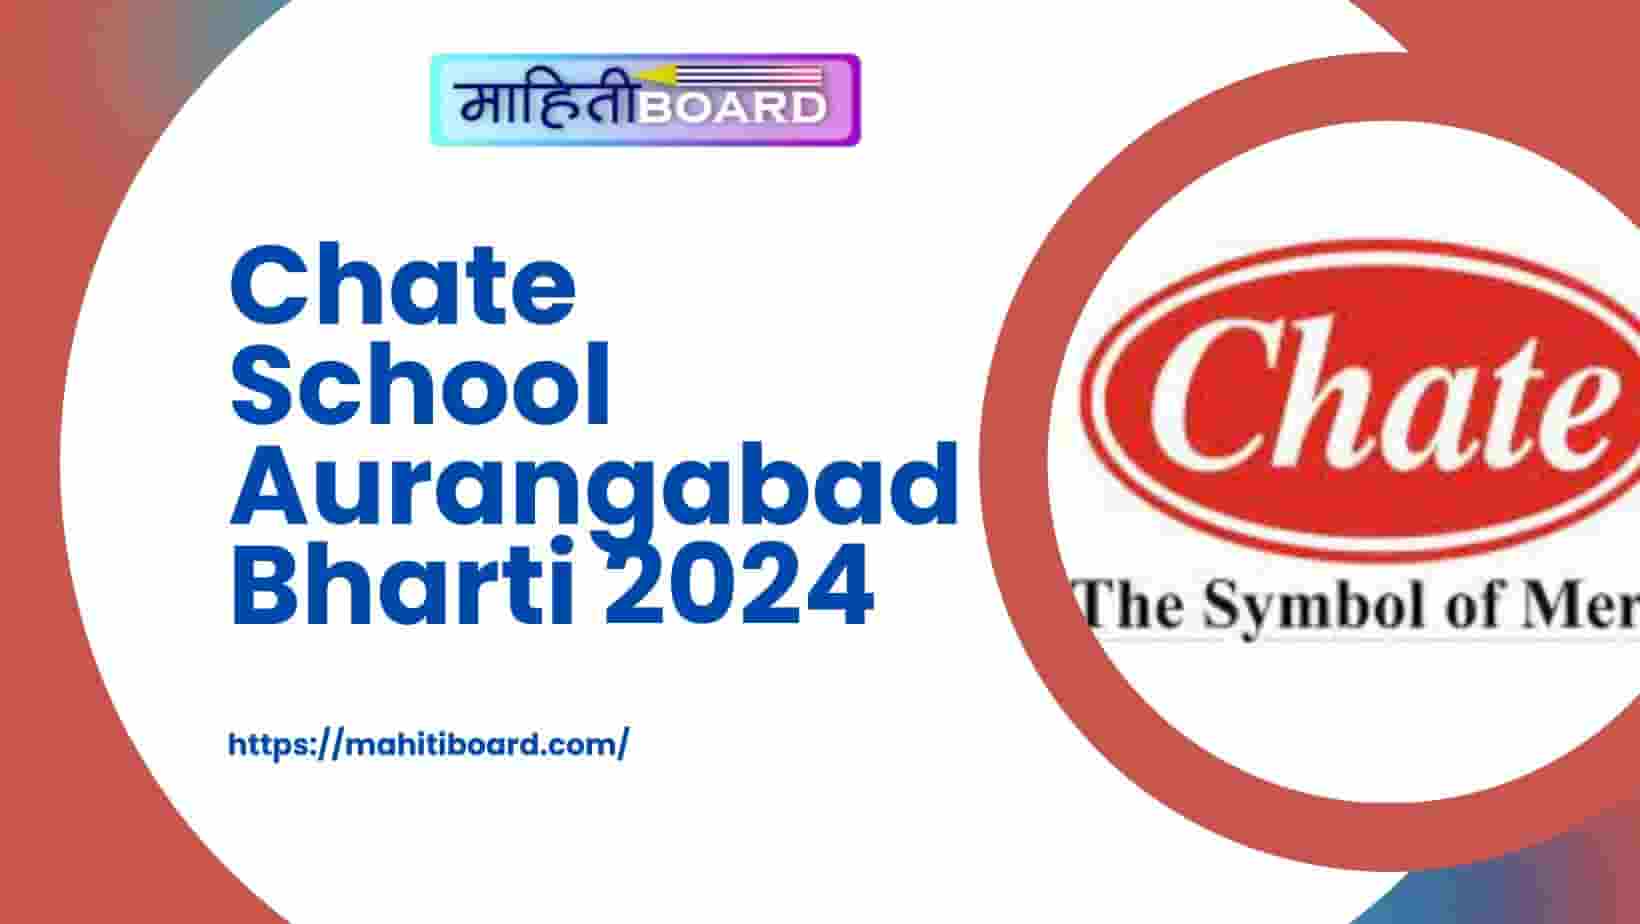 Chate School Aurangabad Bharti 2024